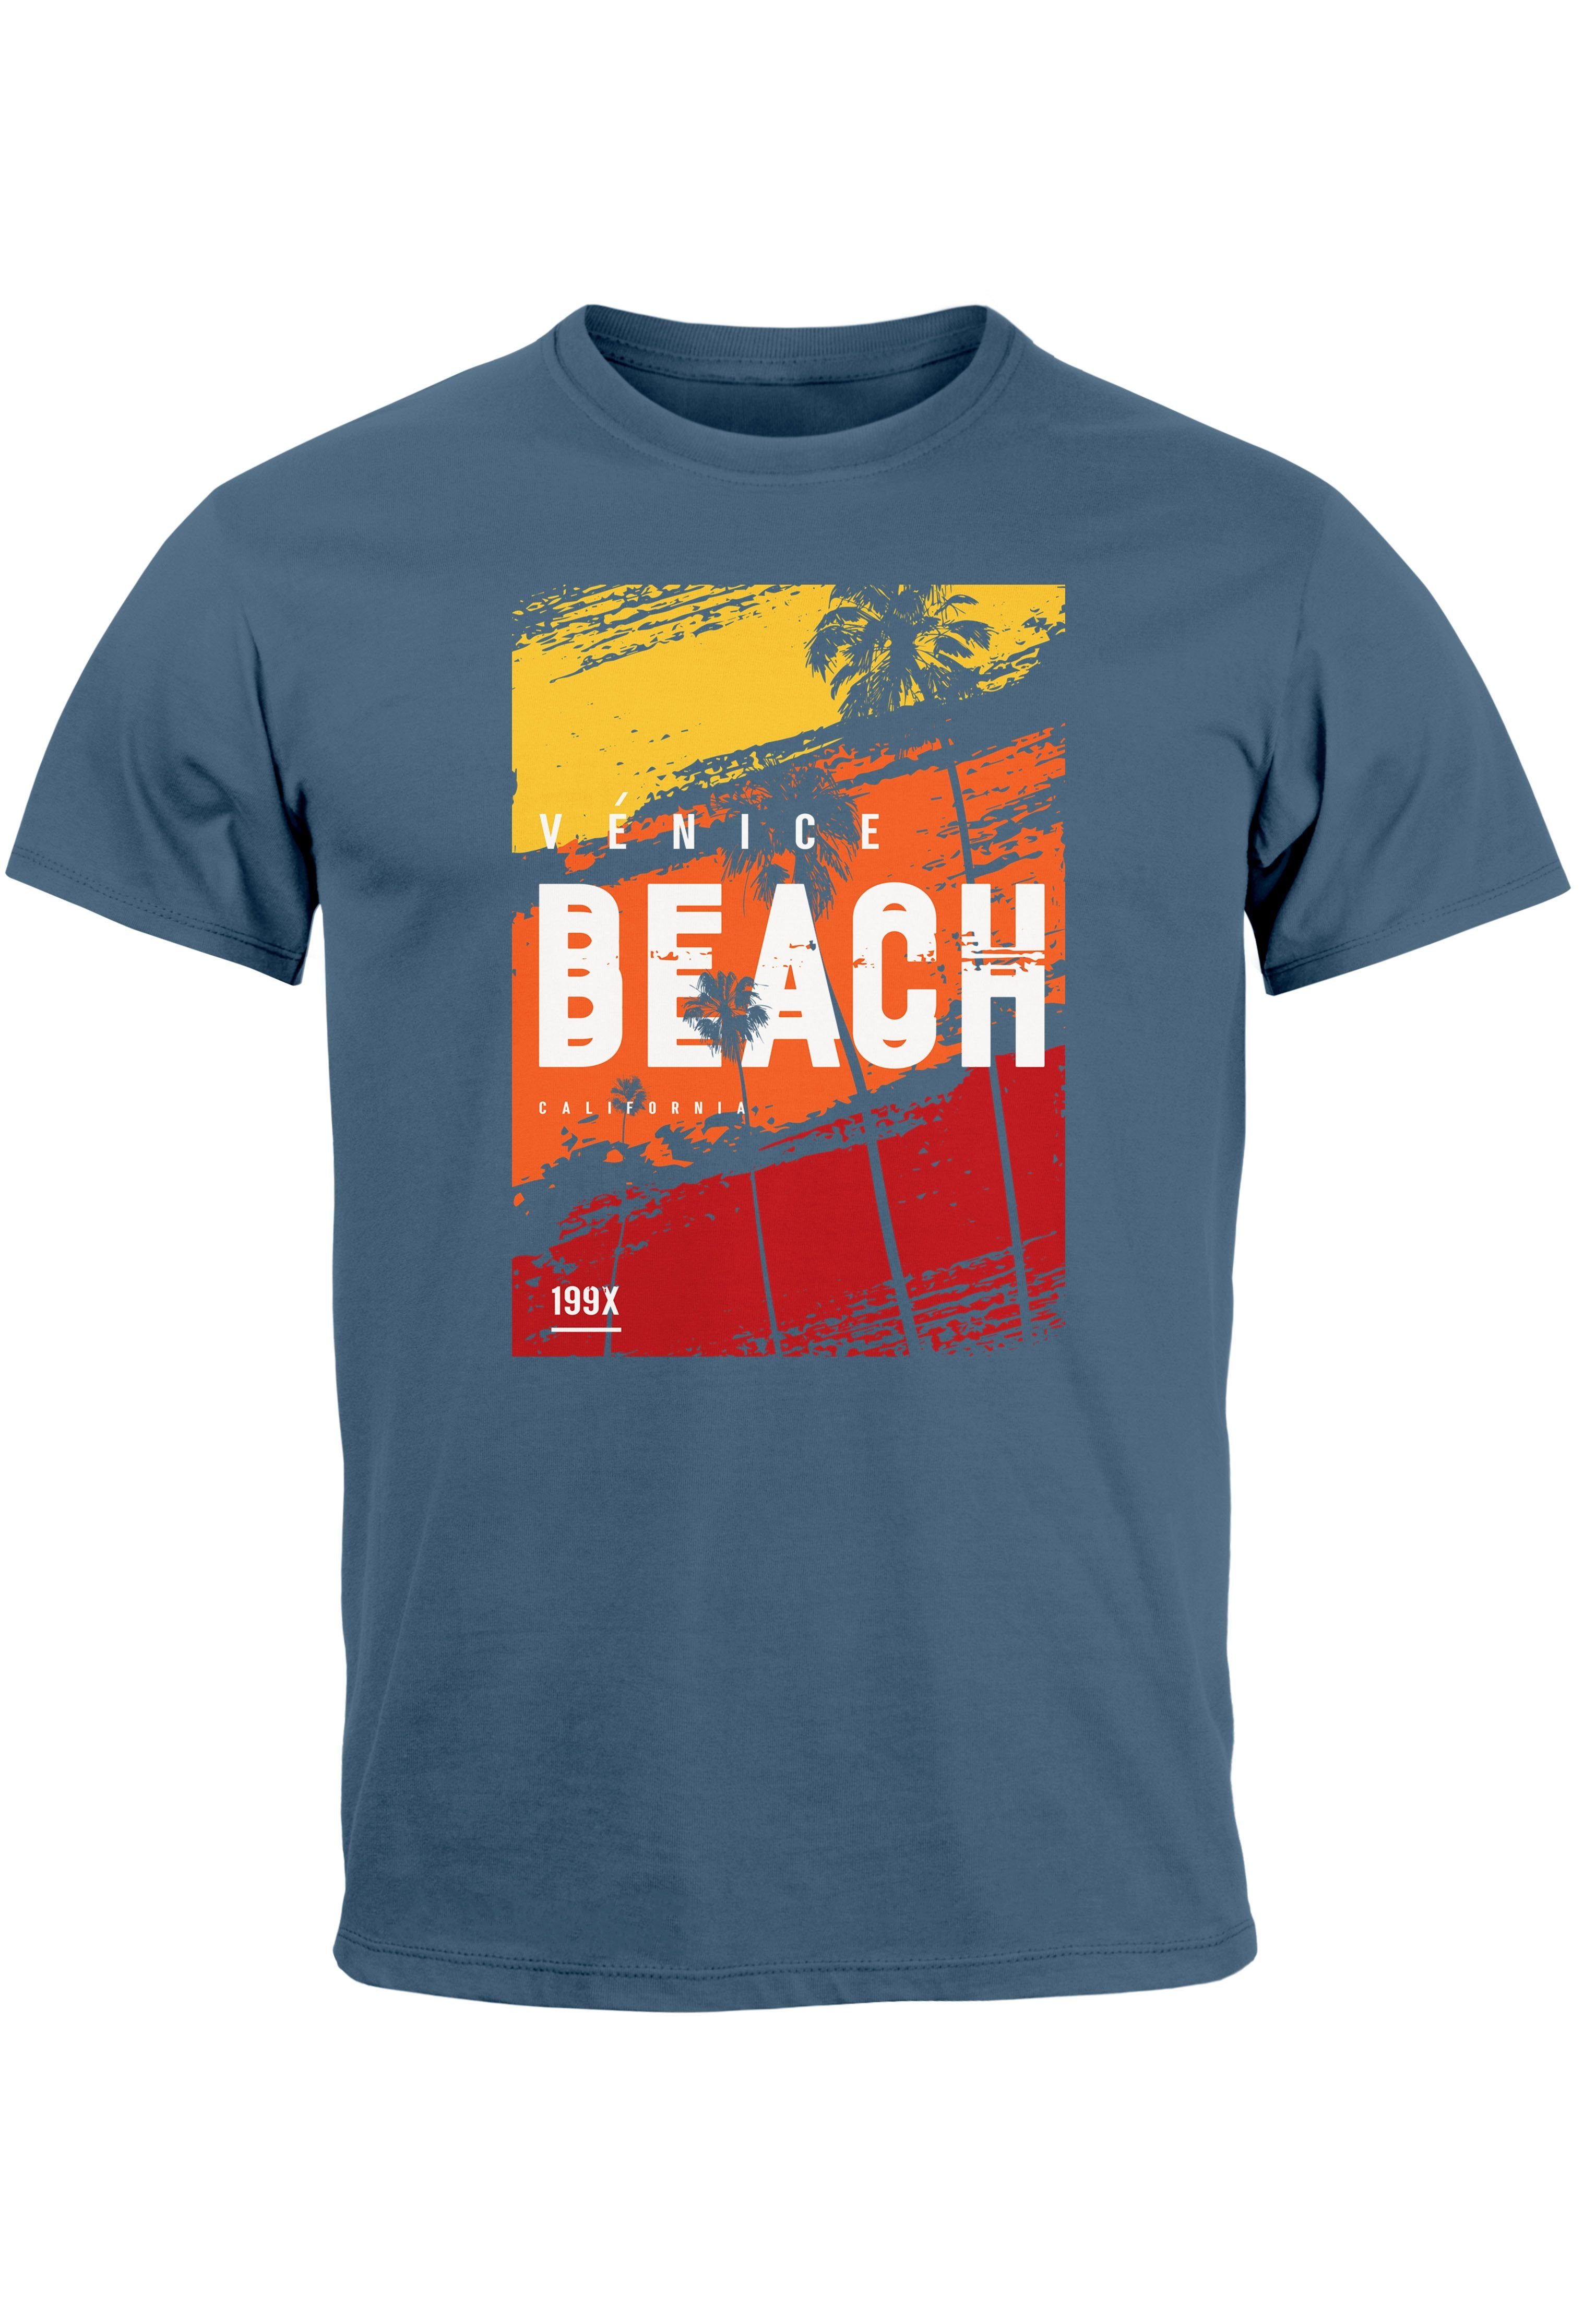 Neverless Print-Shirt Herren T-Shirt Sommer Venice Beach Surfing Motiv Aufdruck Strand Palme mit Print denim blue